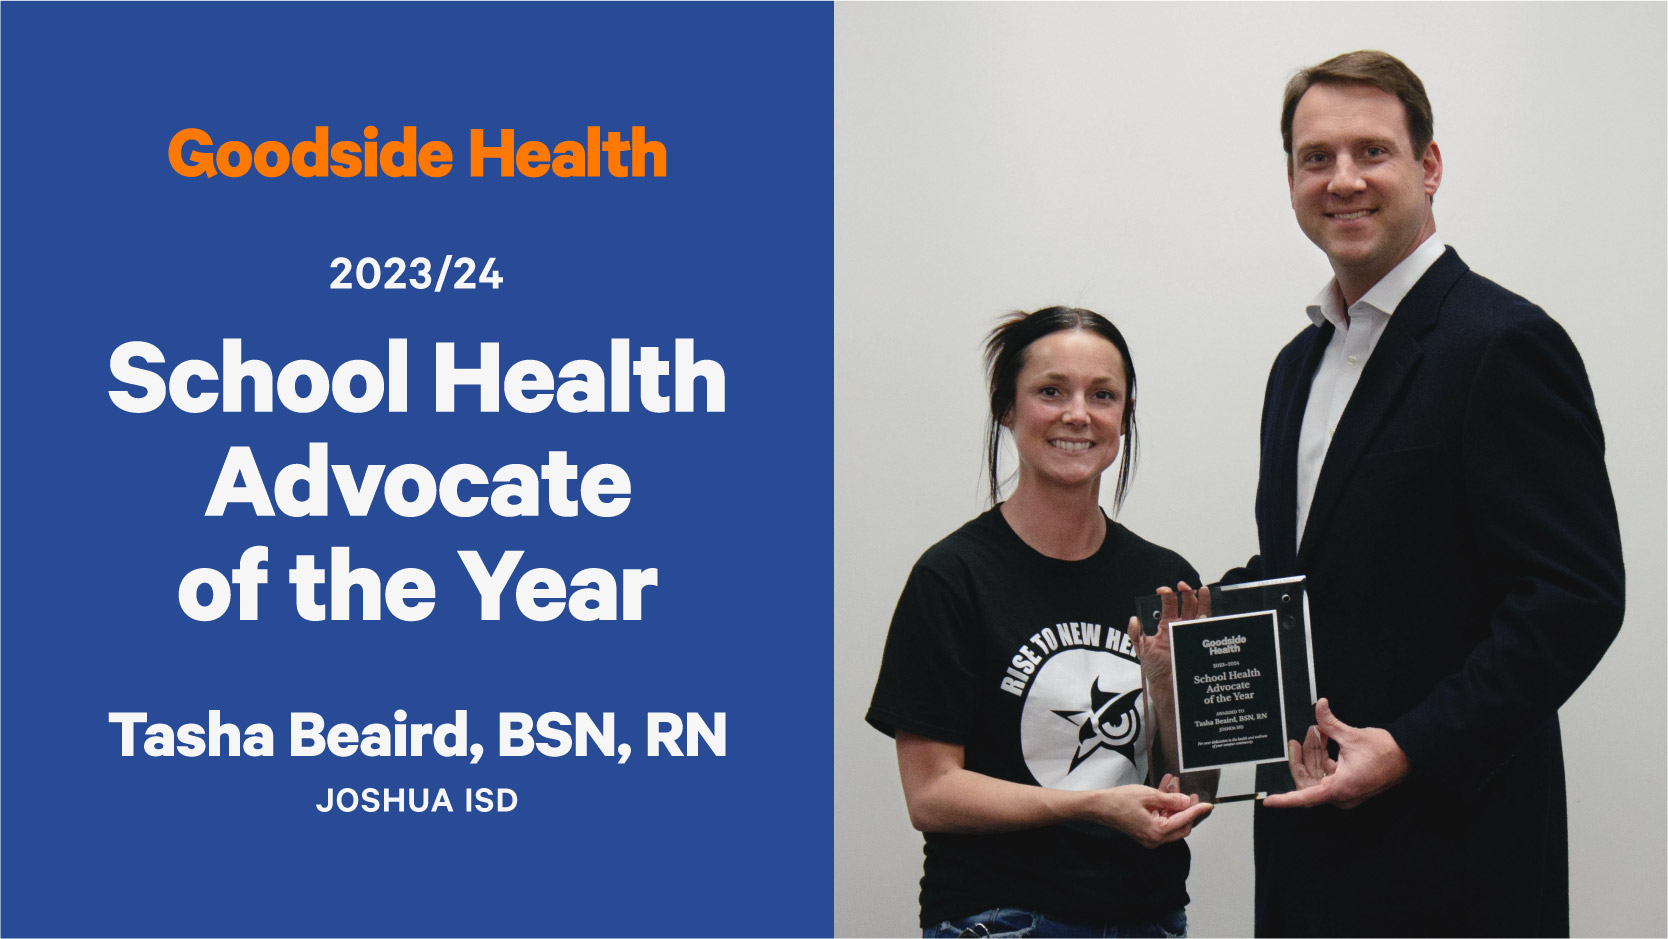 Goodside Health 2023/24 School Health Advocate of the Year